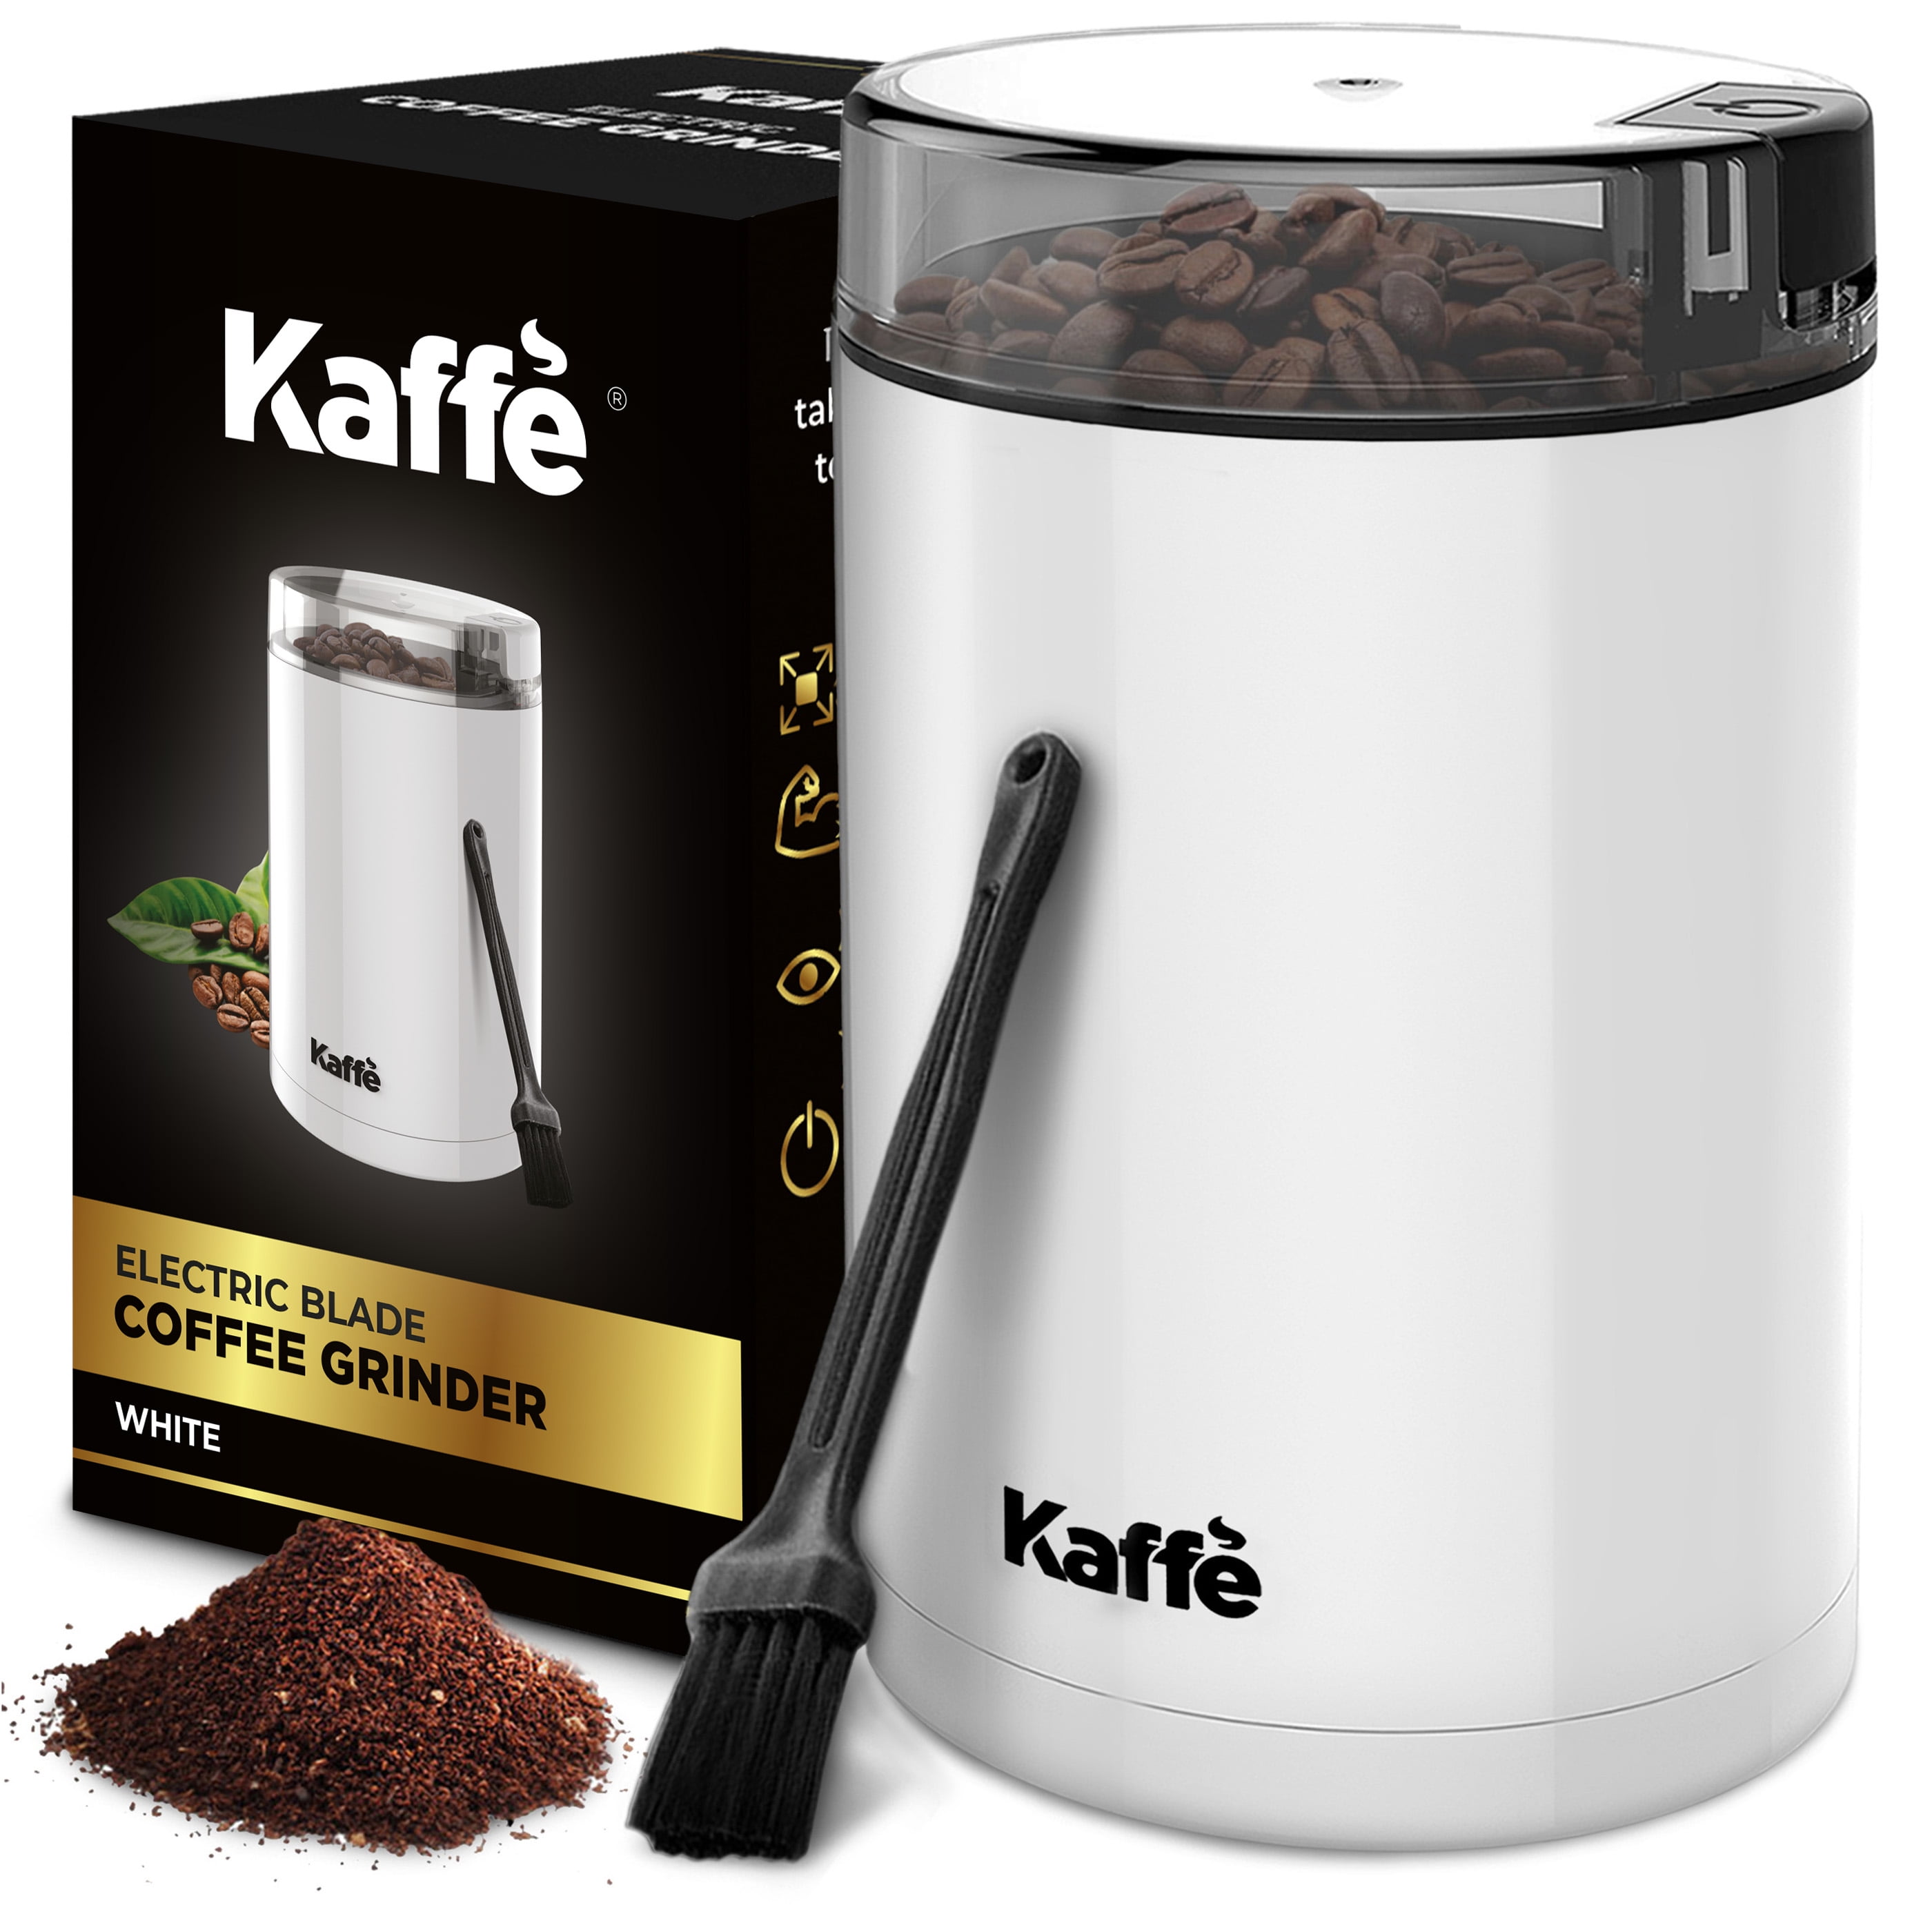 Mr. Coffee® Multi-Grind 12-Cup Automatic Coffee Grinder